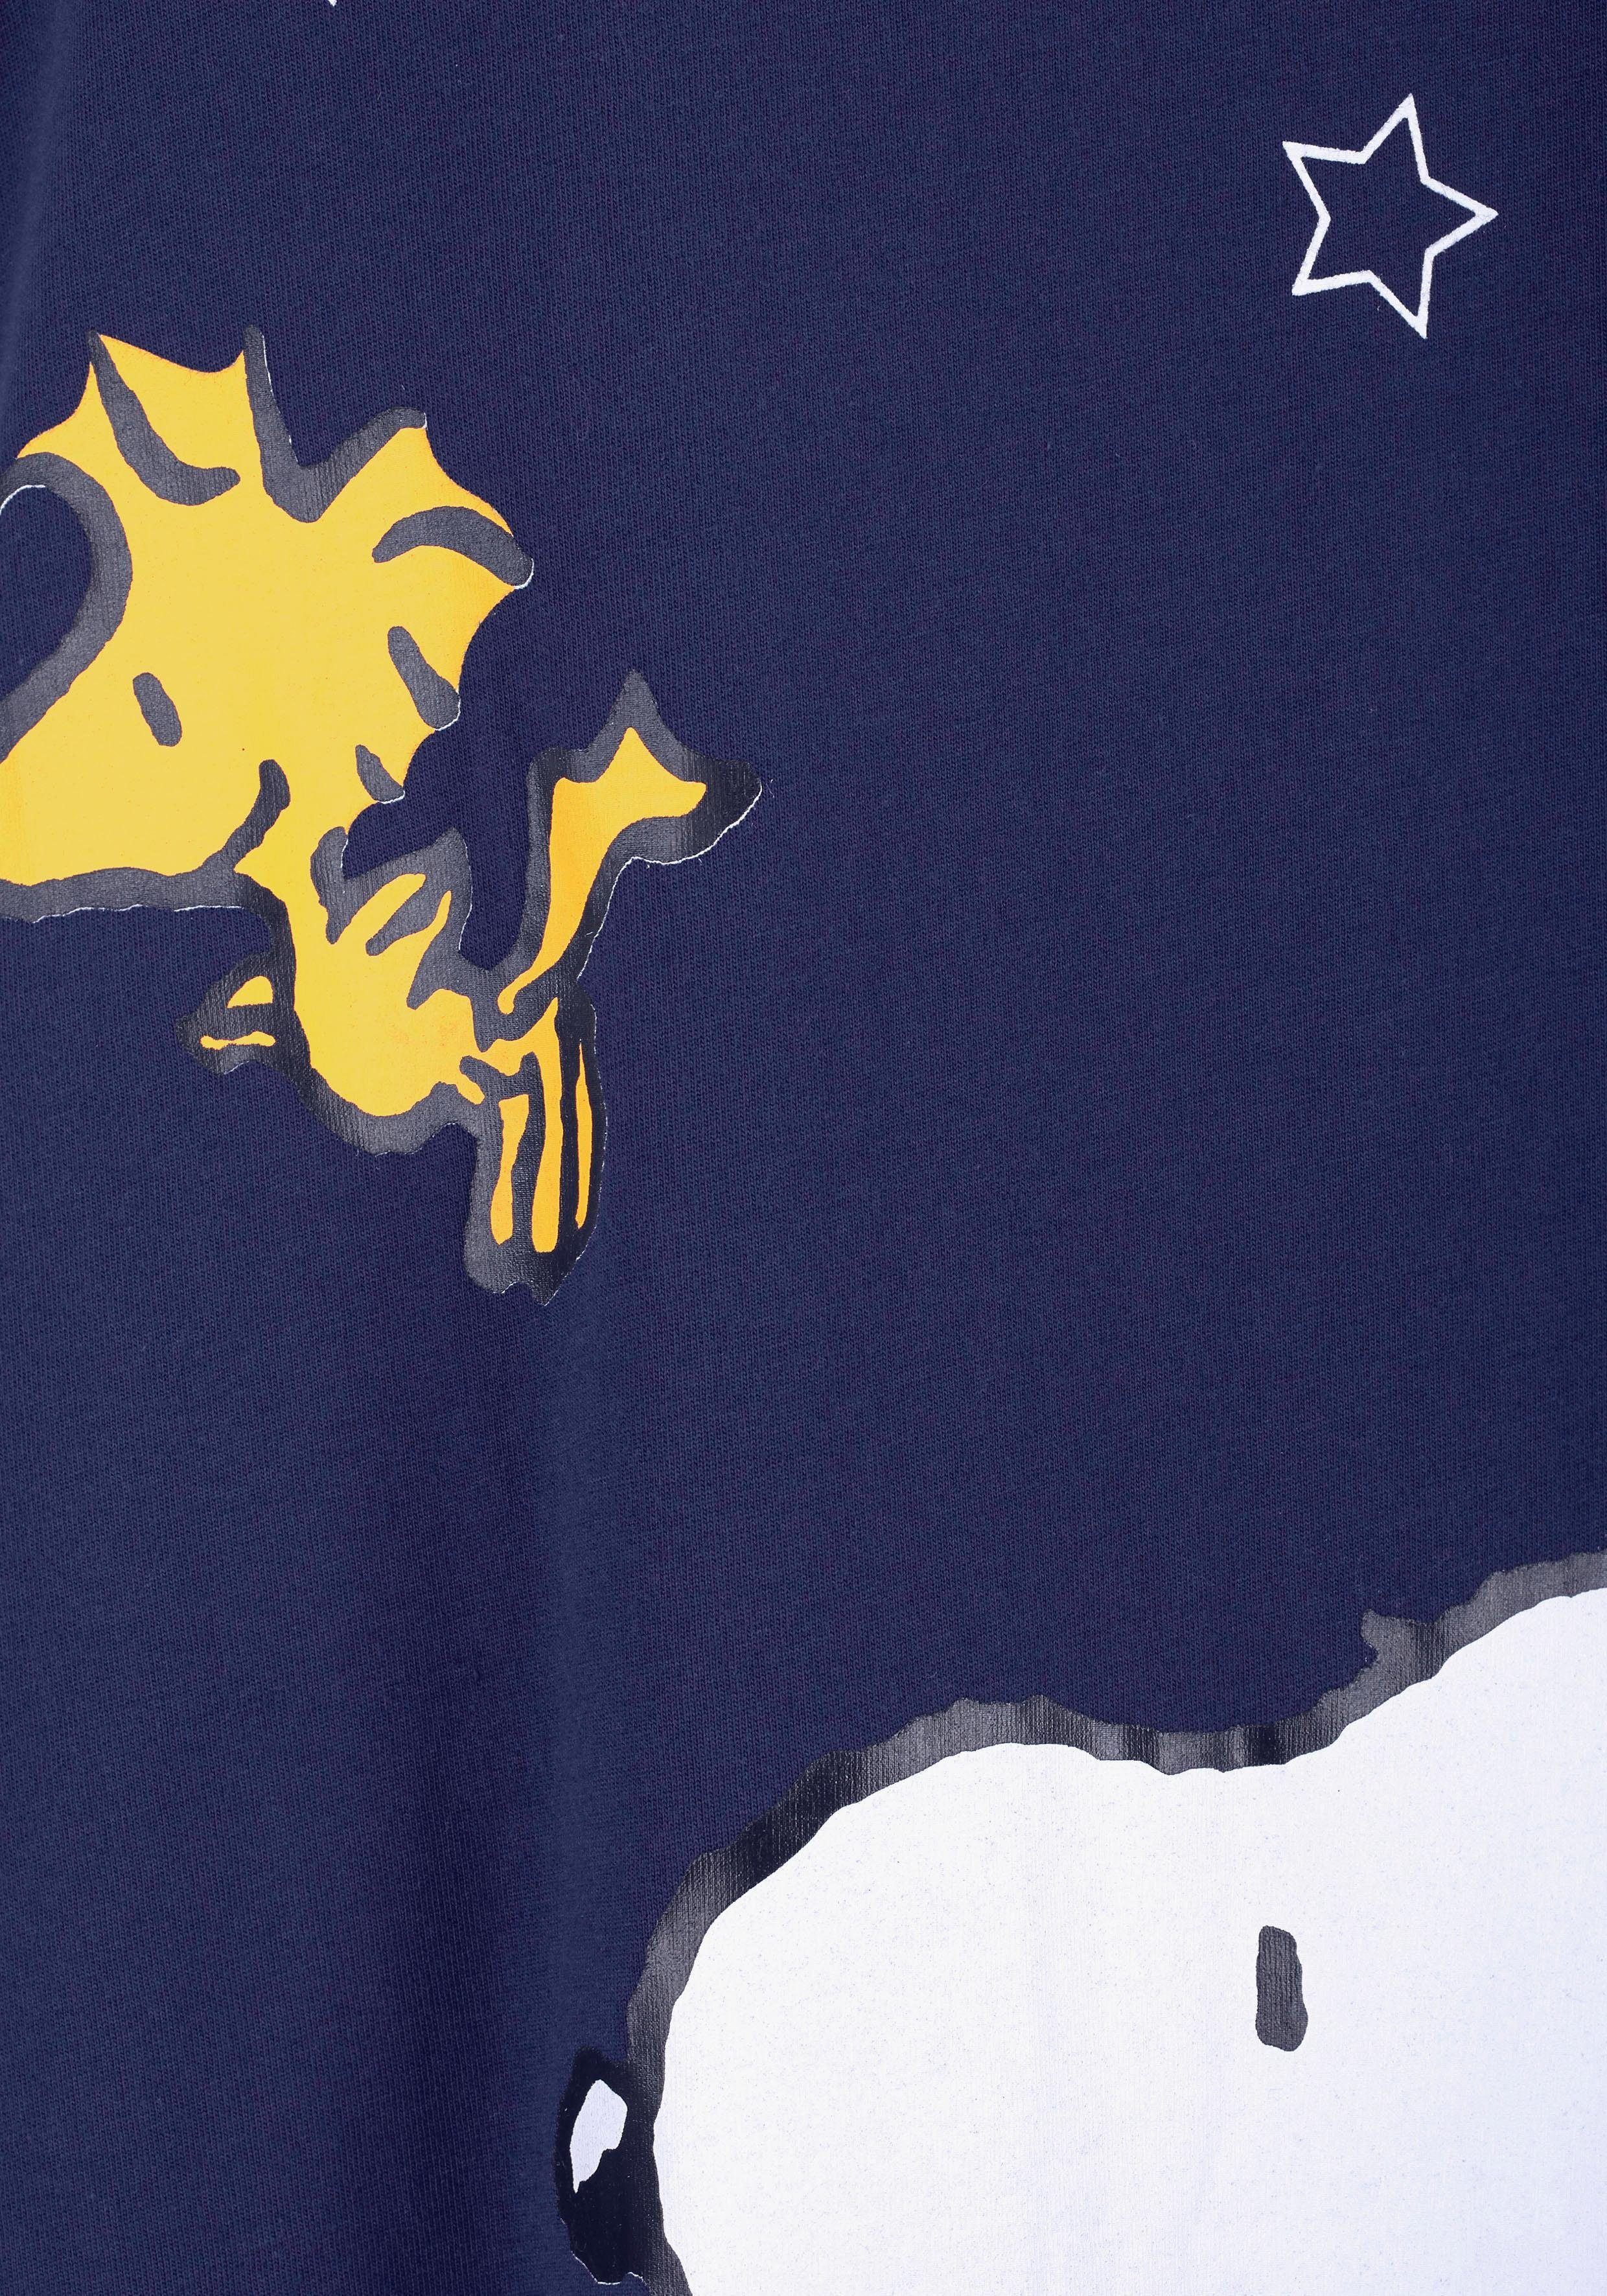 PEANUTS Sleepshirt mit Snoopy-Print in marine Minilänge